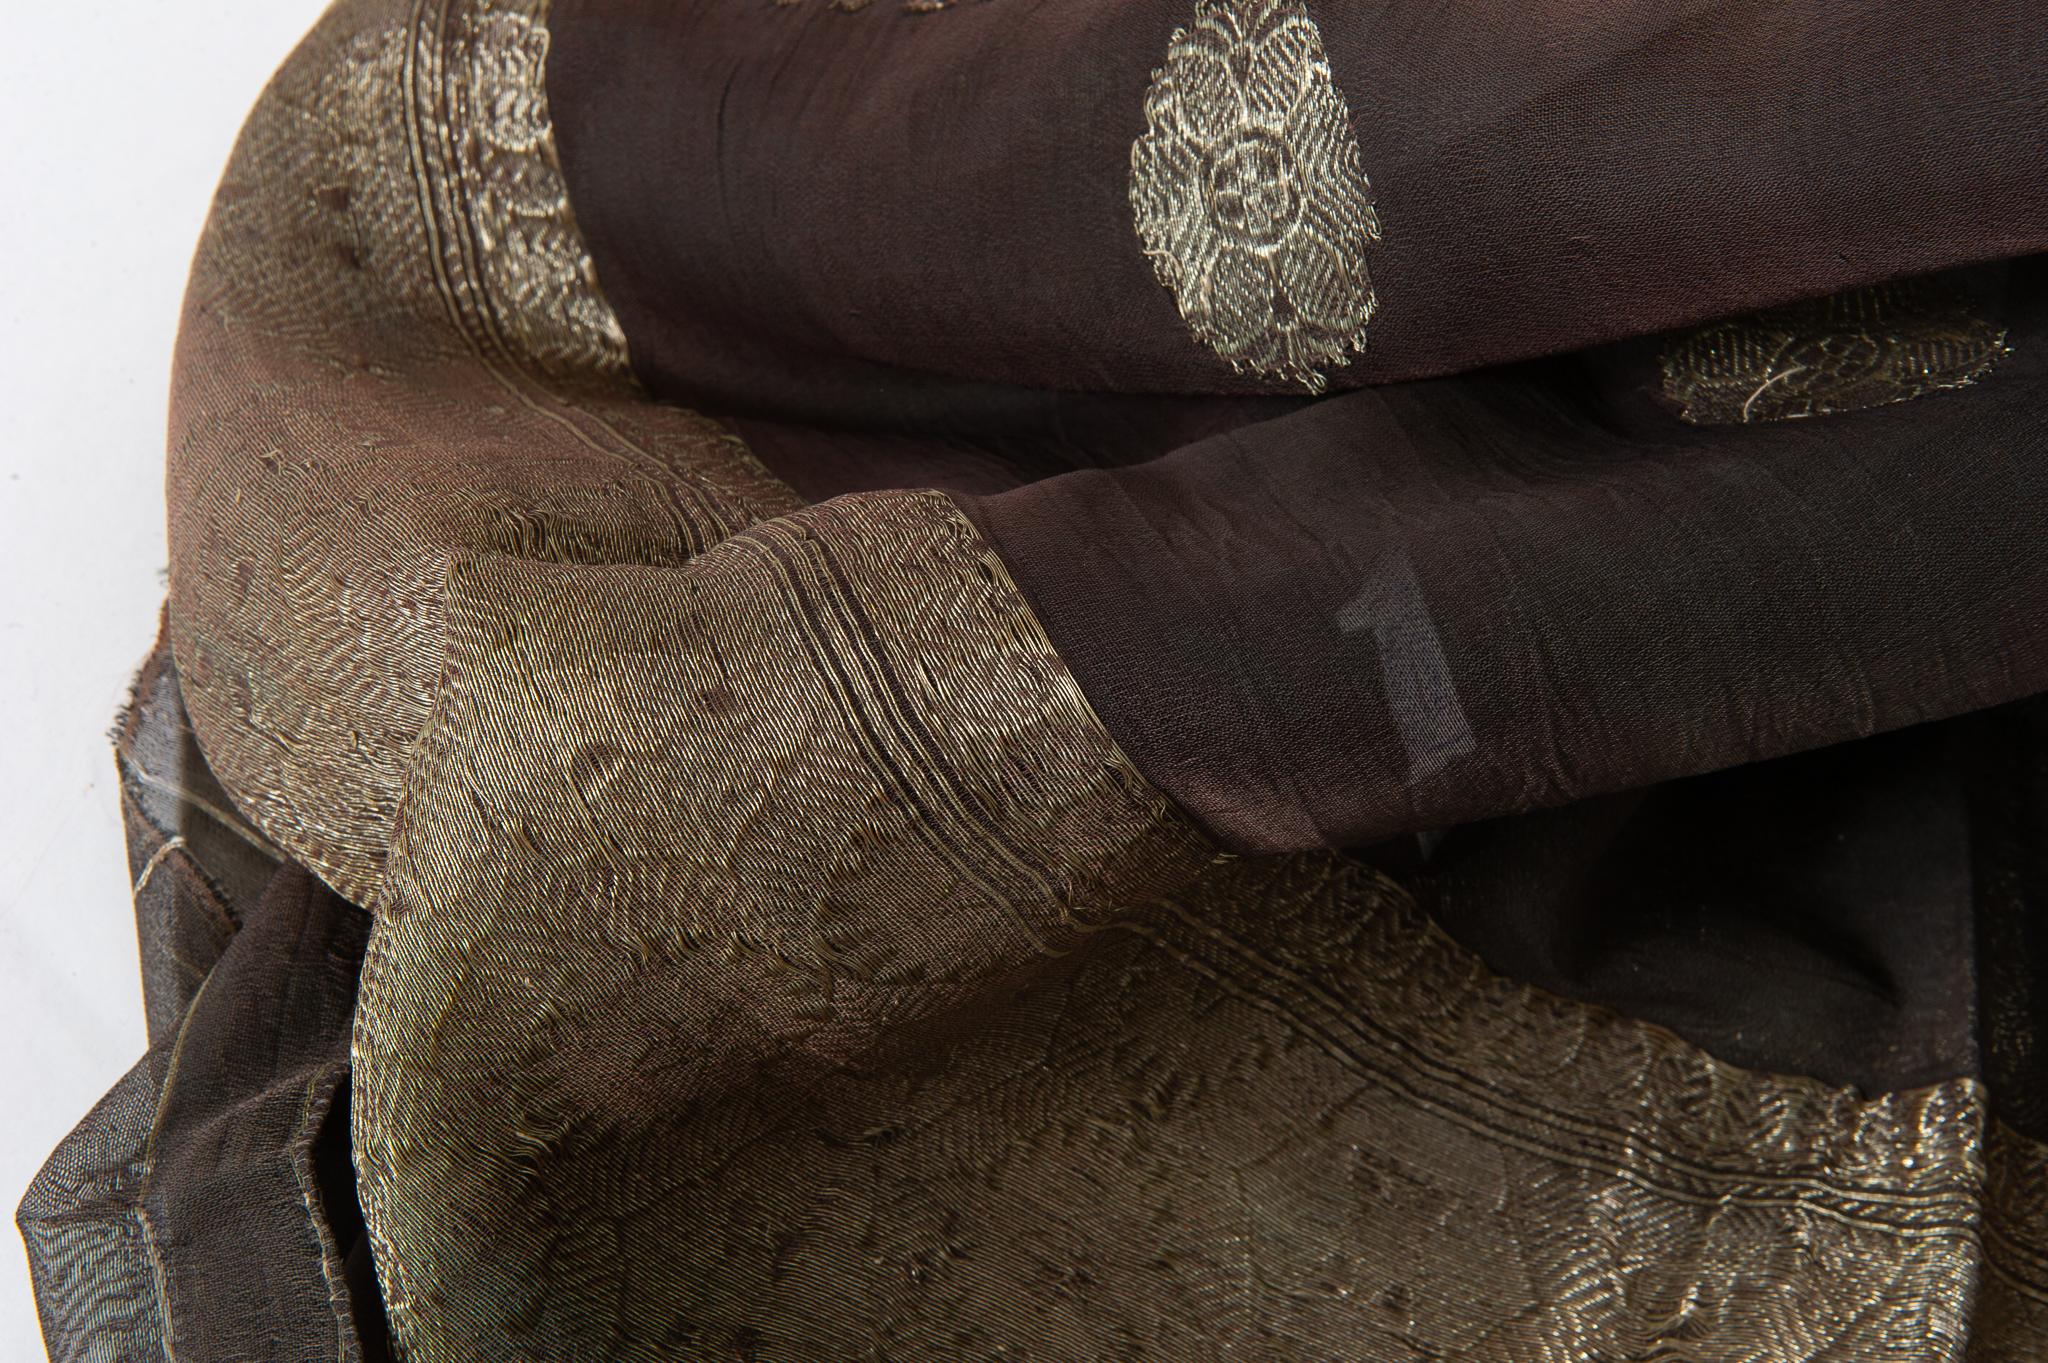 Vintage Indian Sari Dark Brown Color, Unusual Curtains or an Evening Dress 8